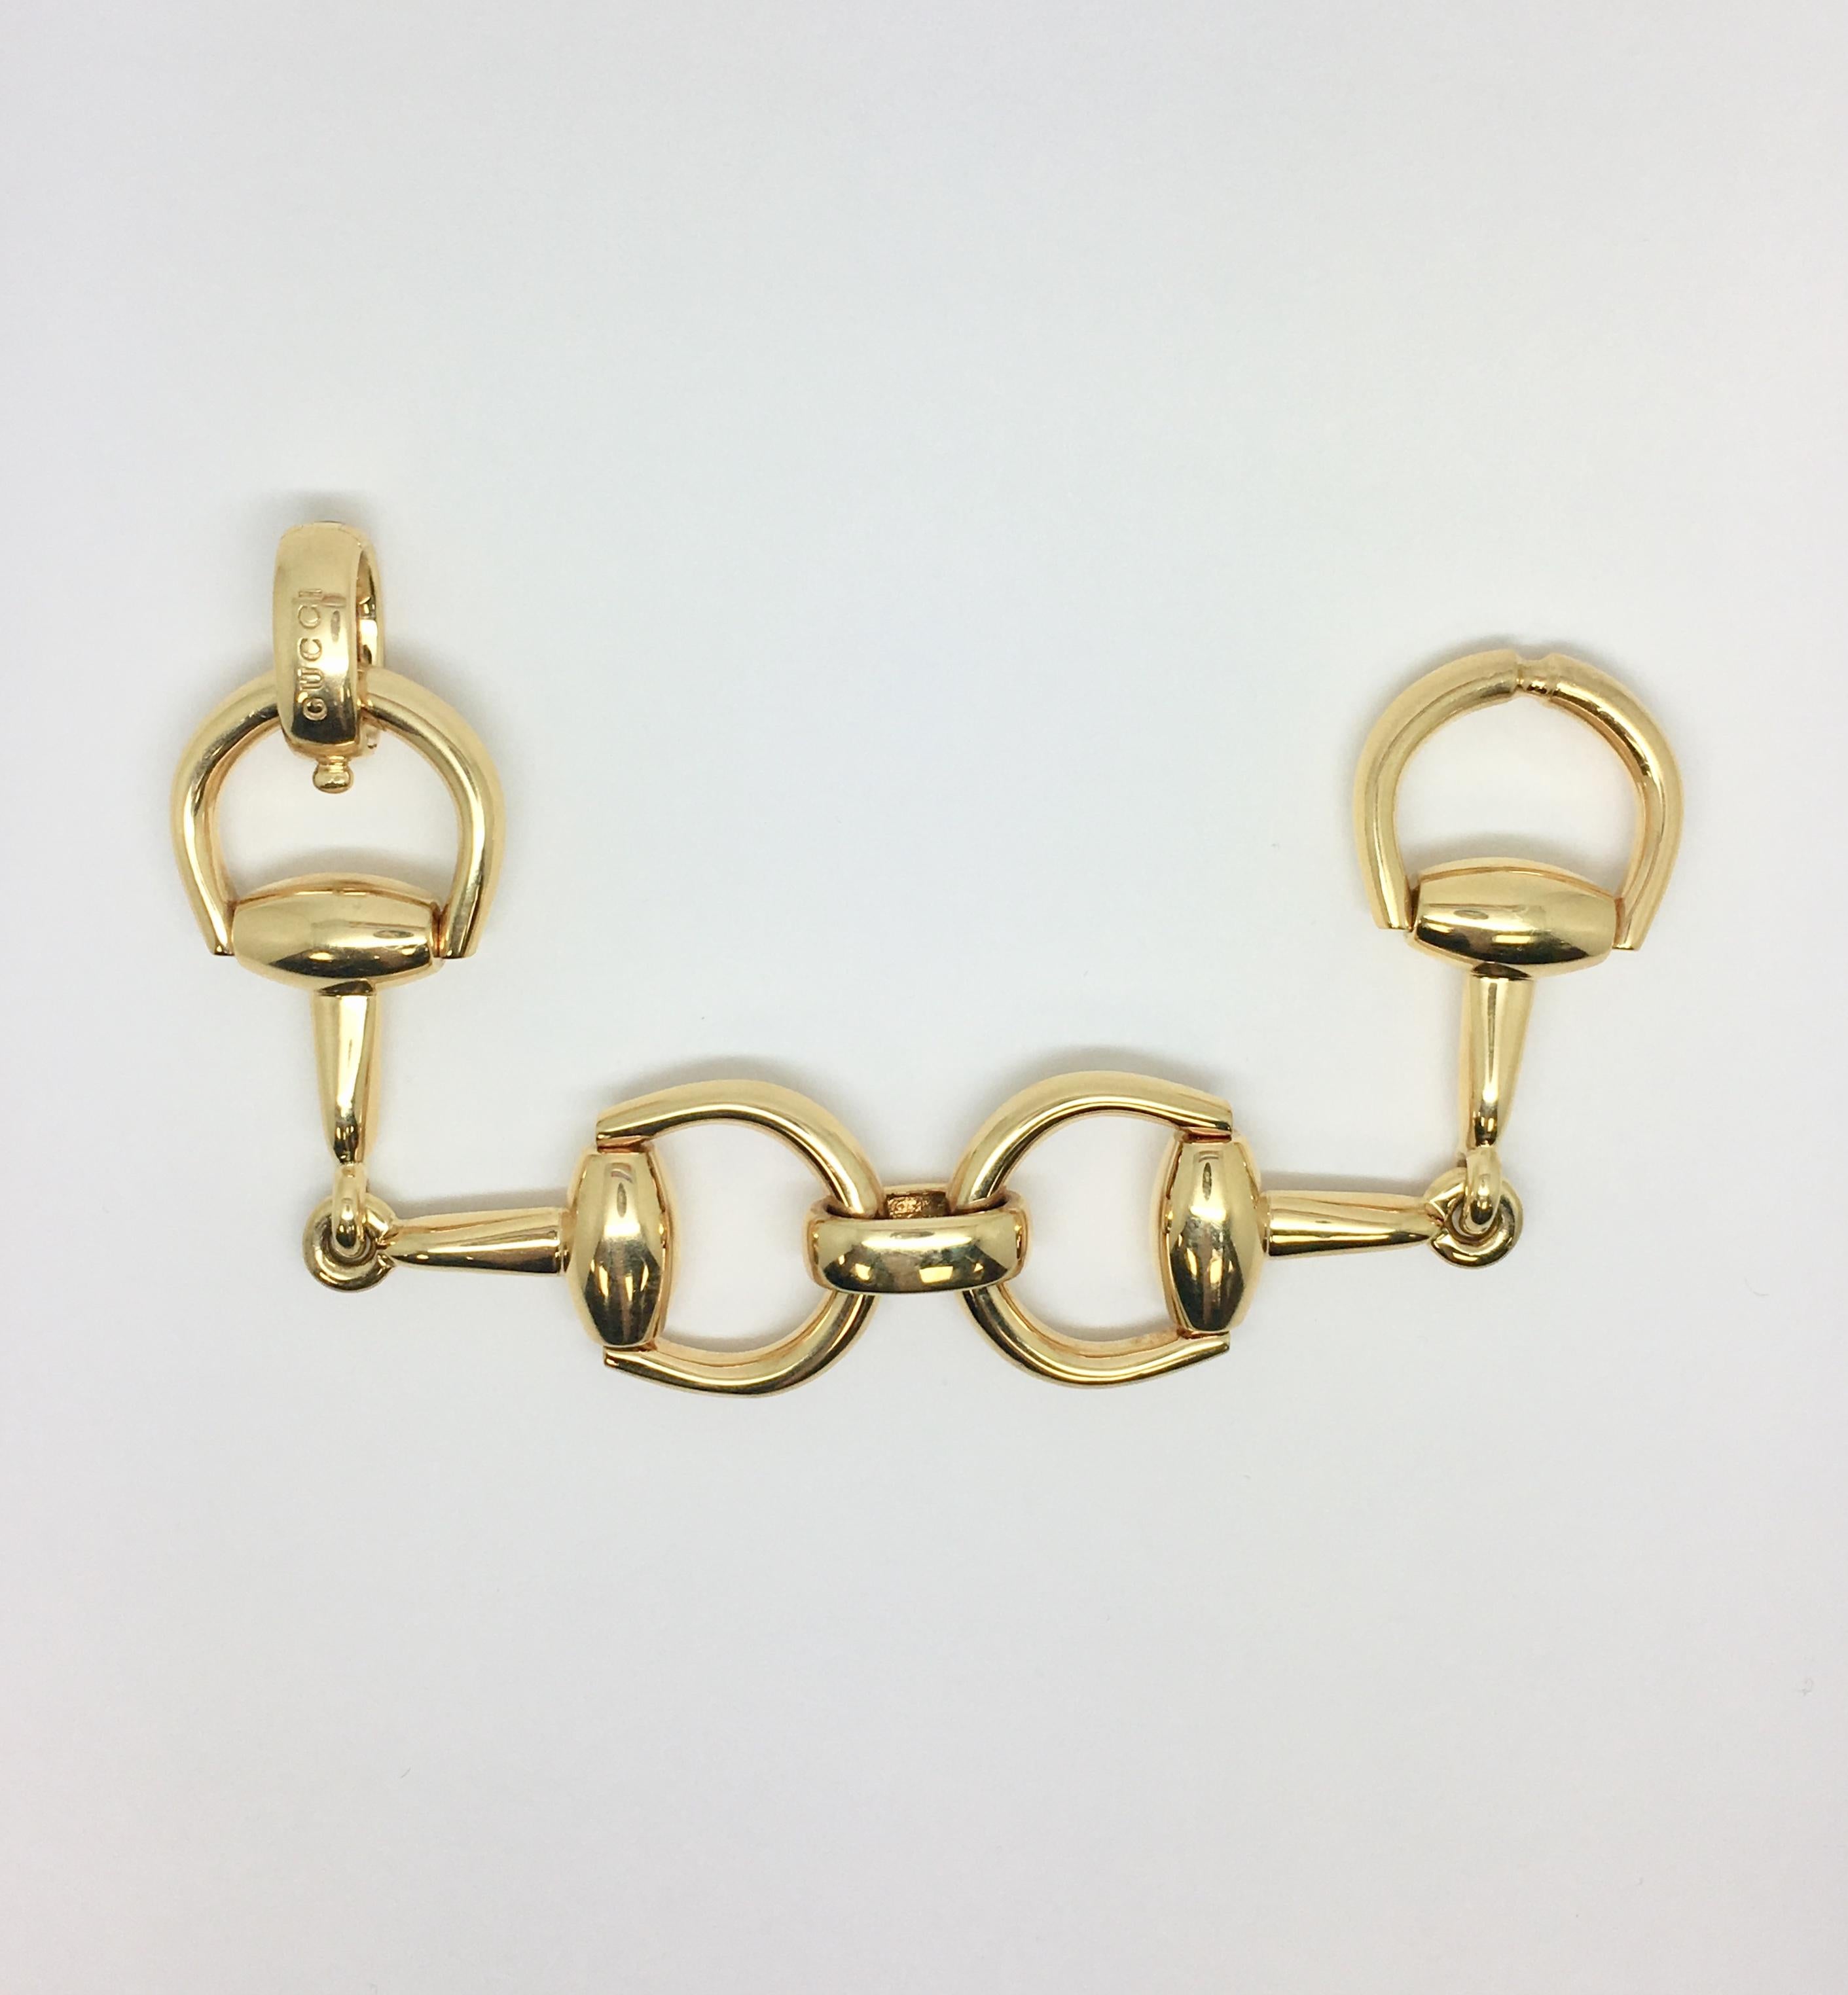 Gucci Gold Horsebit Bracelet - 5 For Sale on 1stDibs